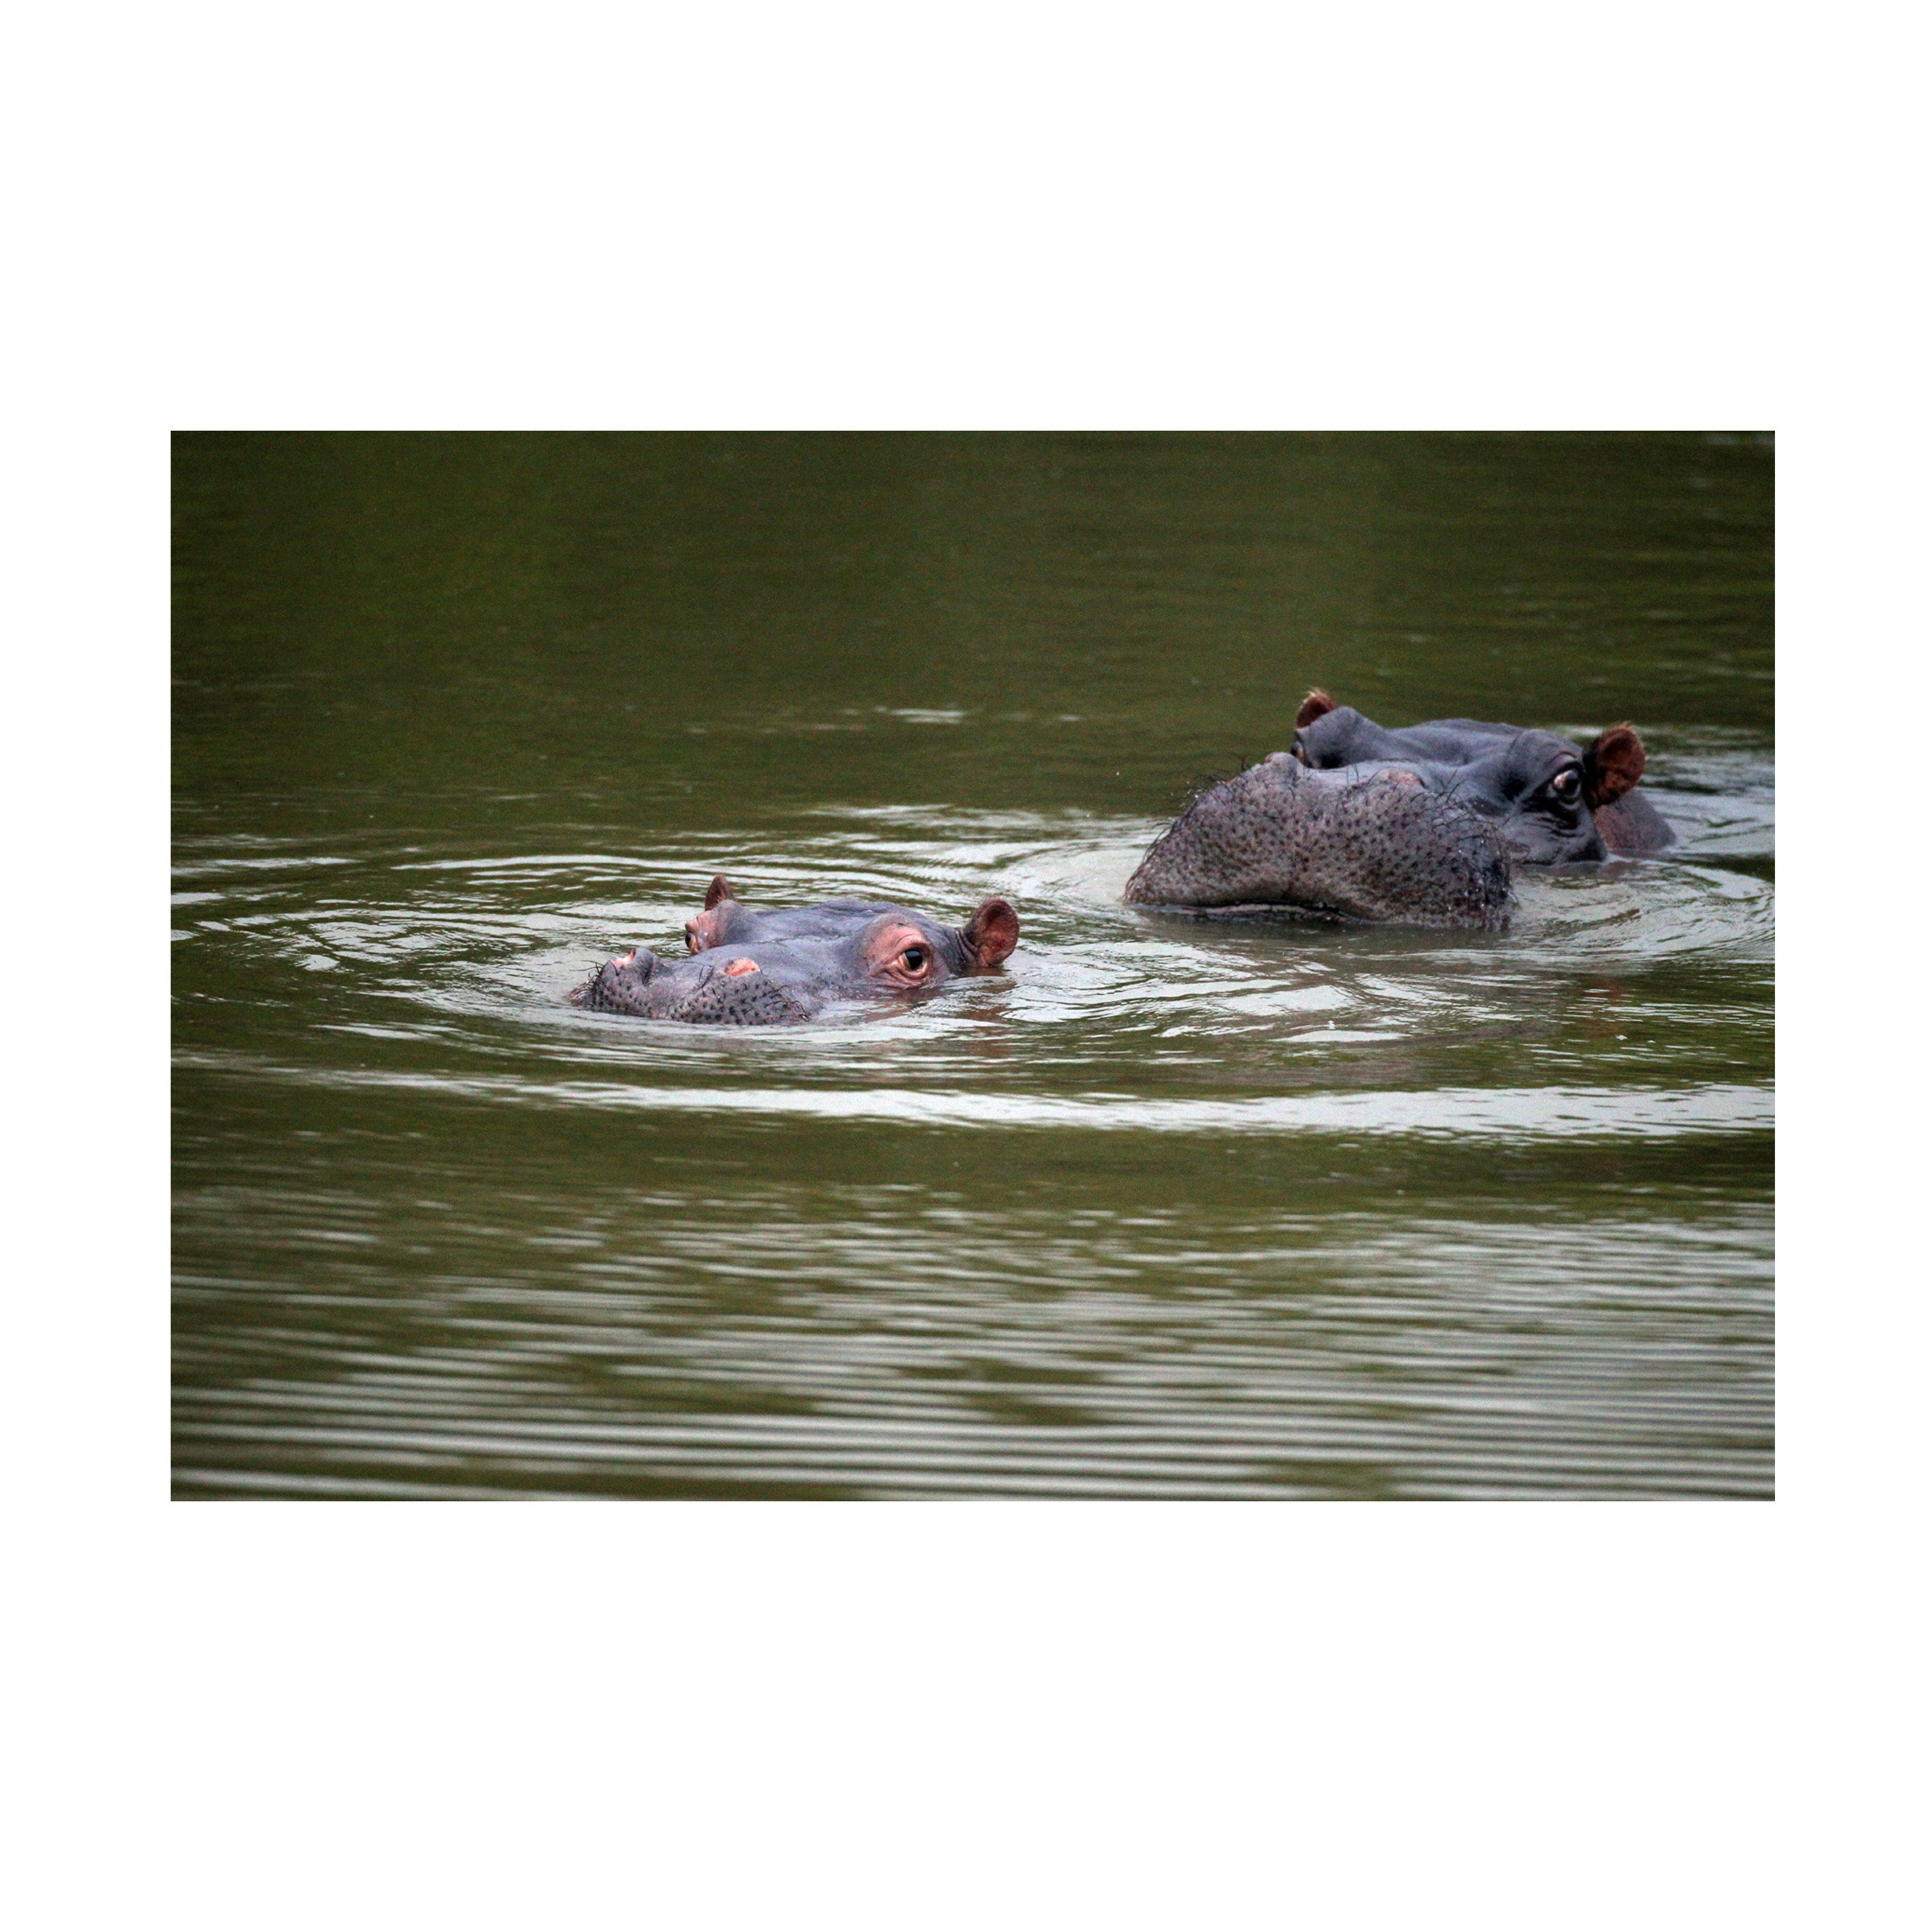 Hippopotamus Ride-On (wood)